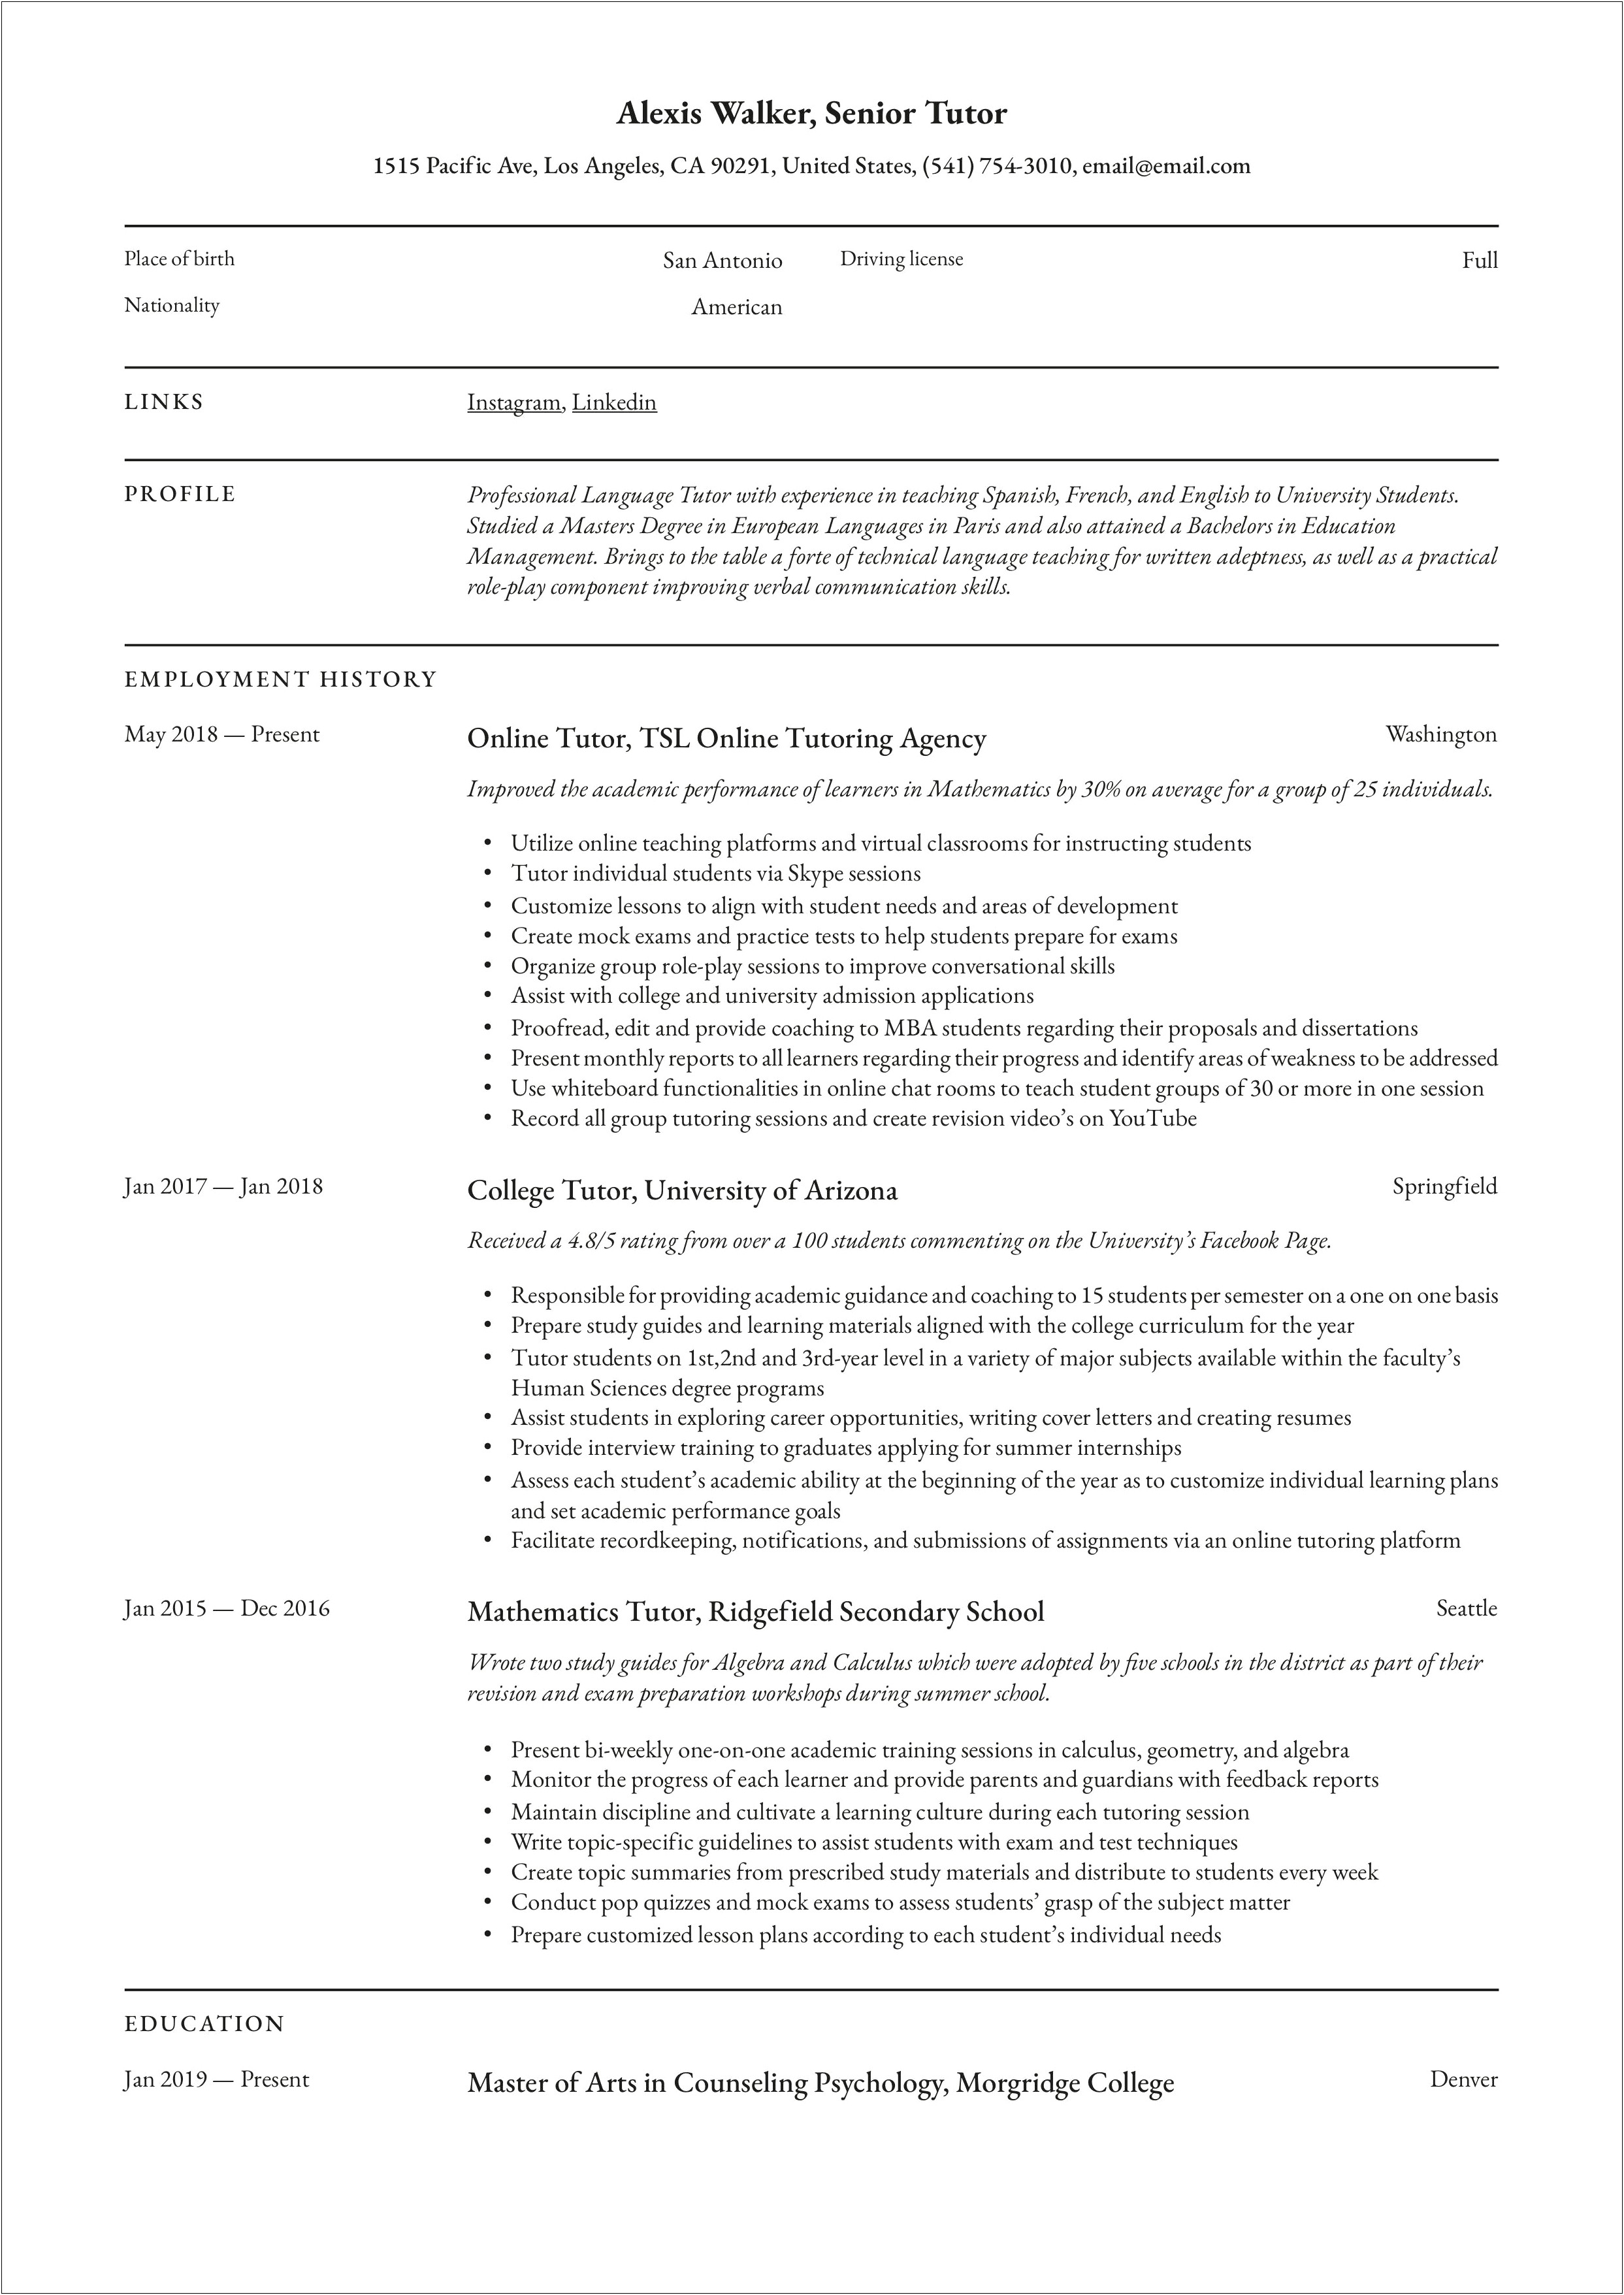 Resume Job Description For Tutor